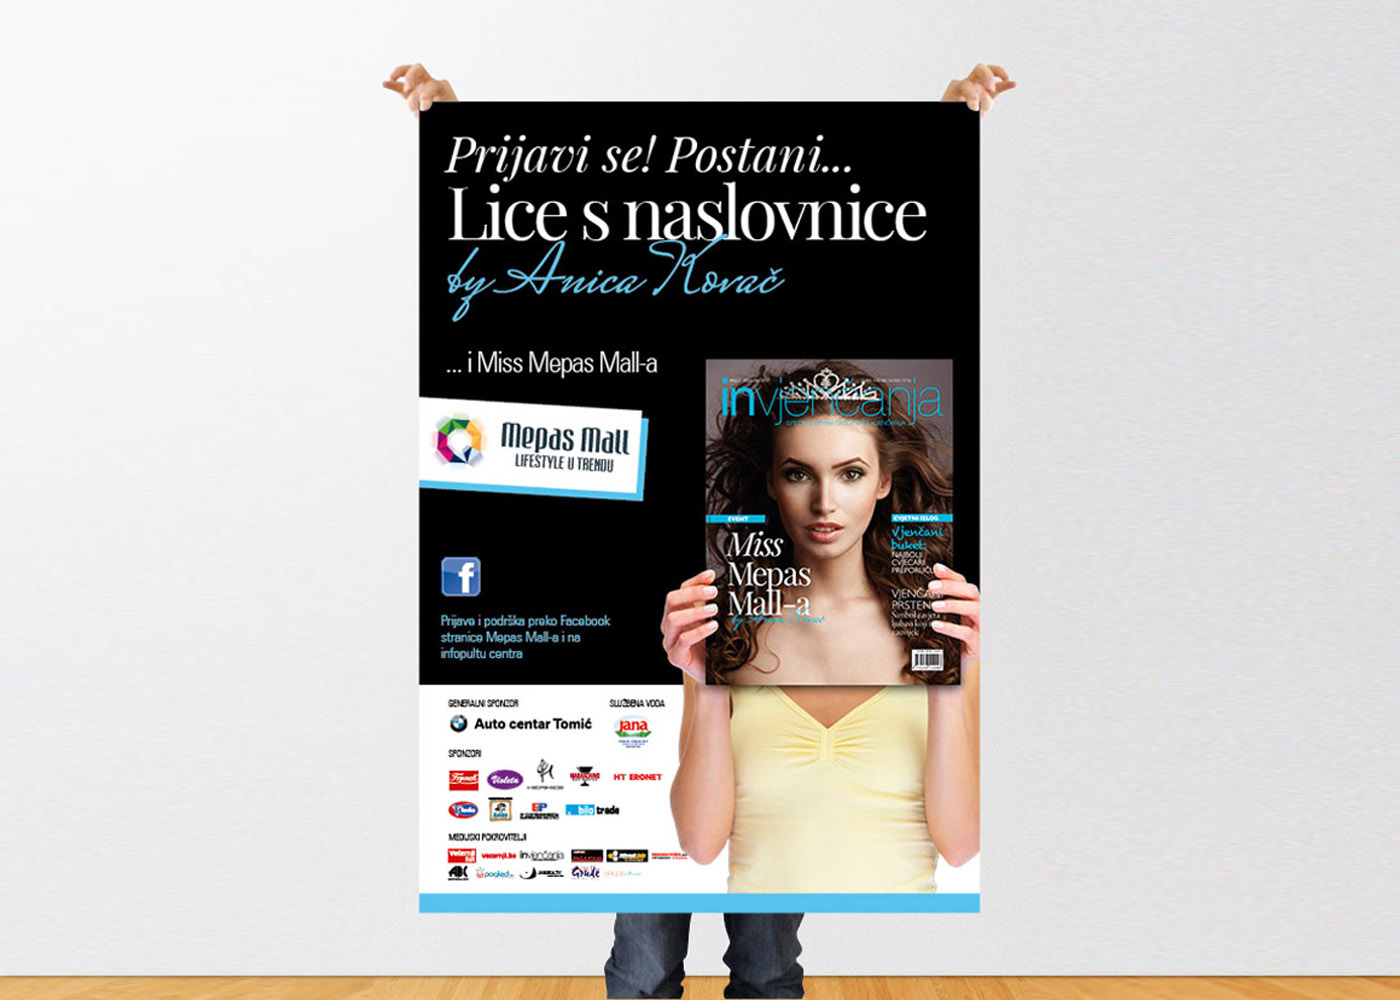 Dizajn event identiteta i promotivne kampanje za "Lice s naslovnice i Miss Mepas Mall-a by Anica Kovač"